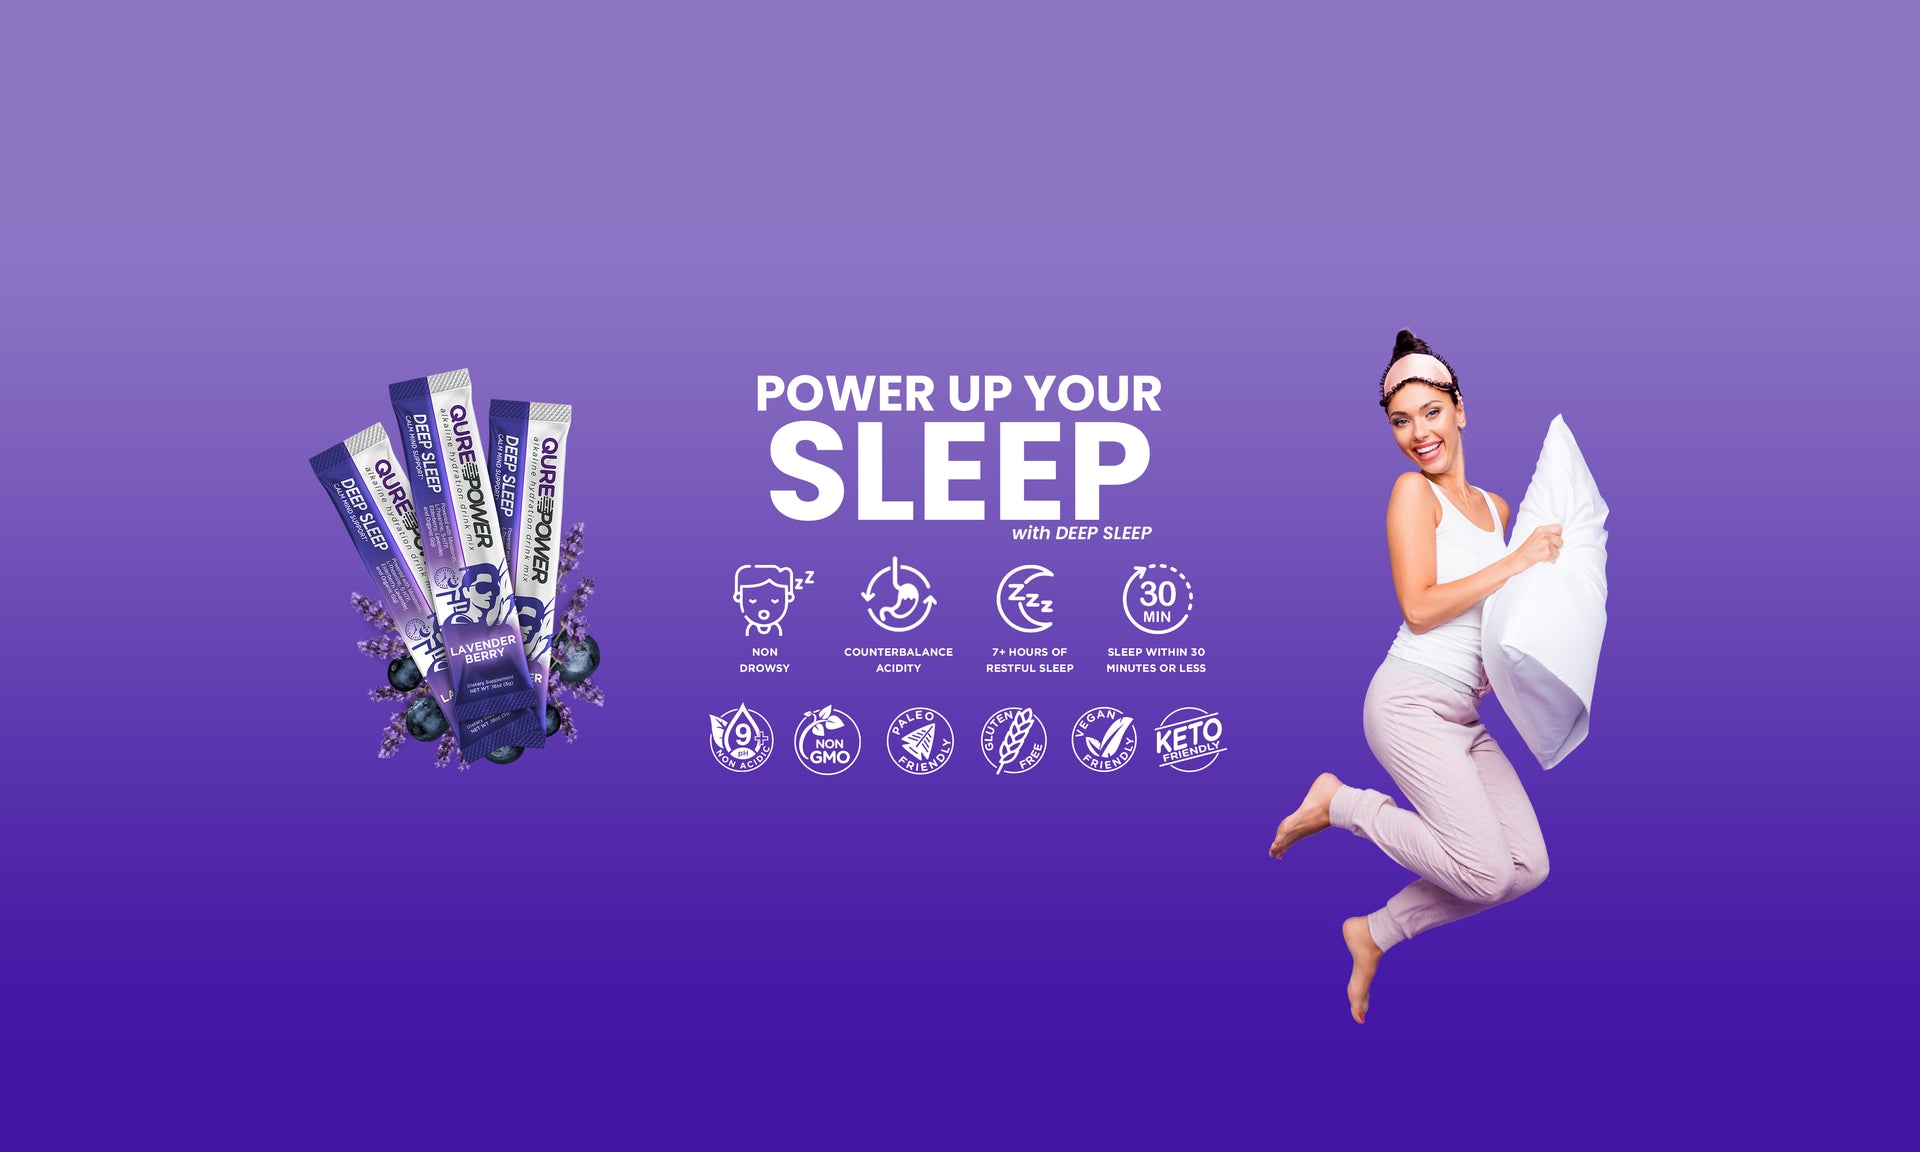  Power up your sleep